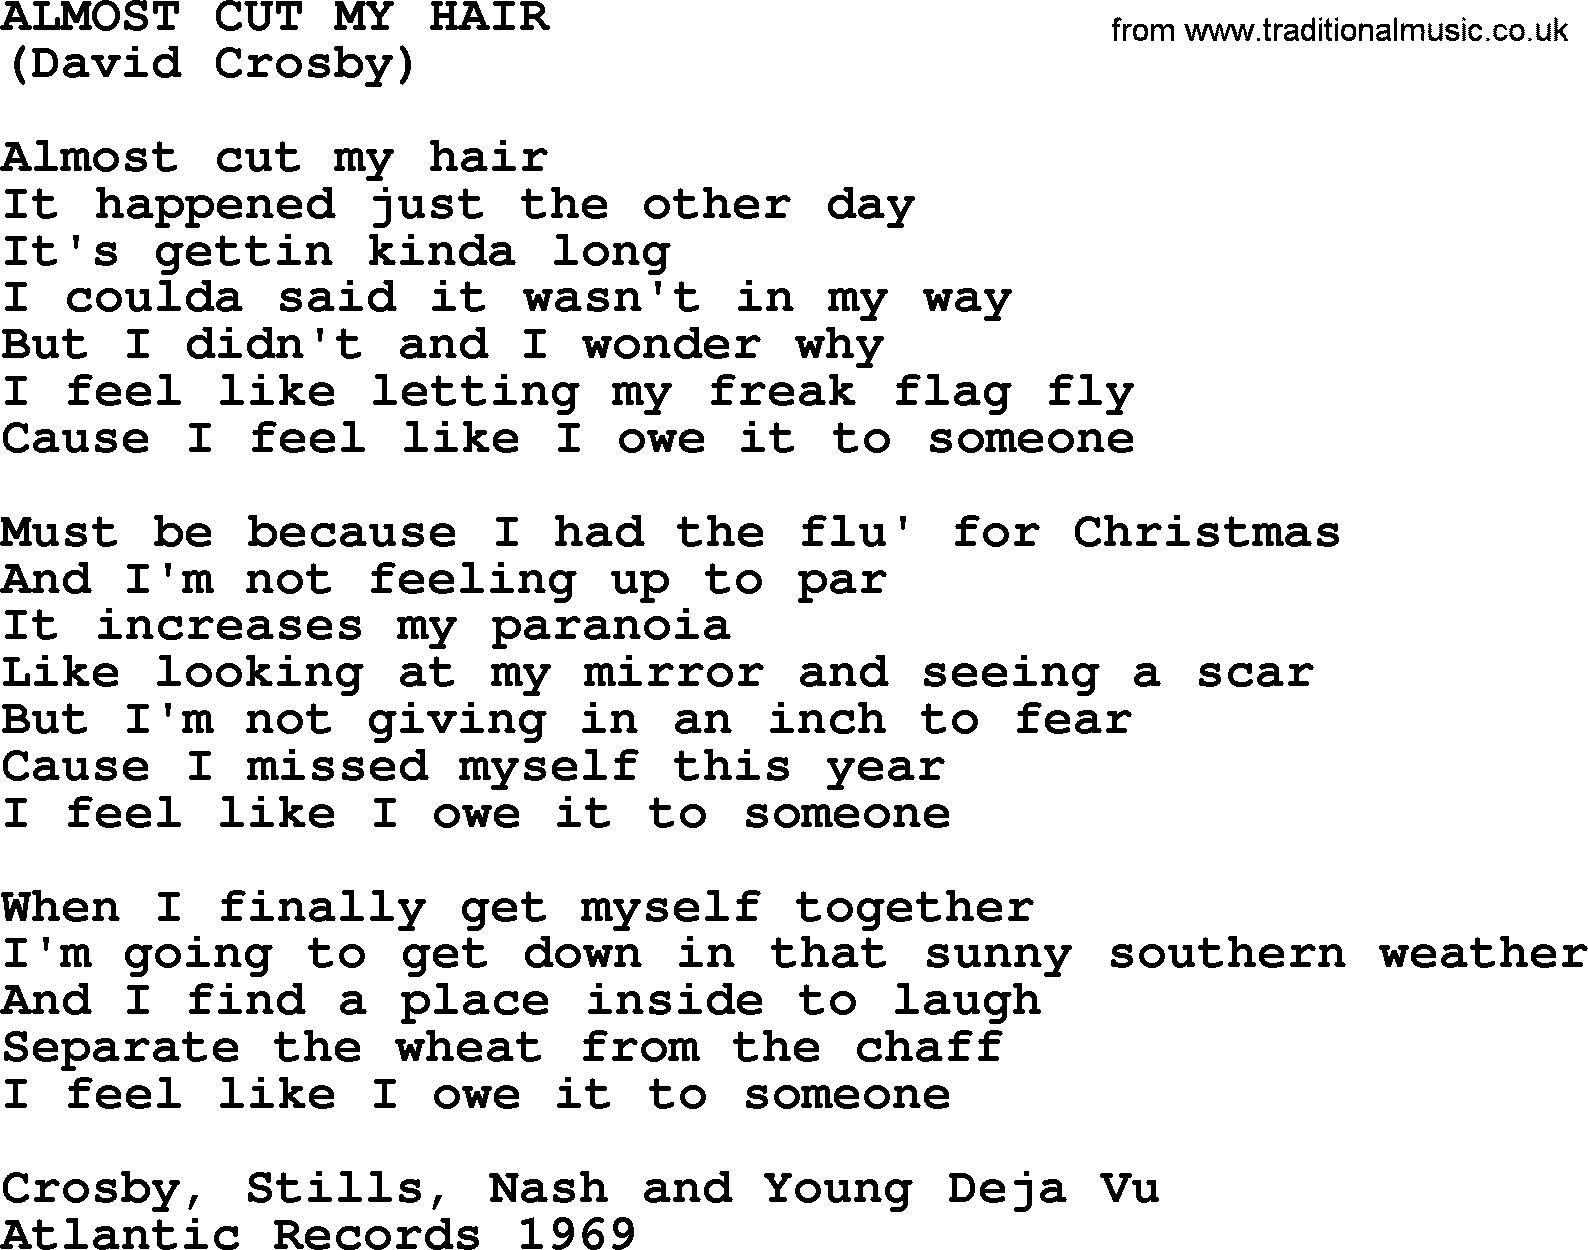 Almost Cut My Hair, by The Byrds - lyrics with pdf